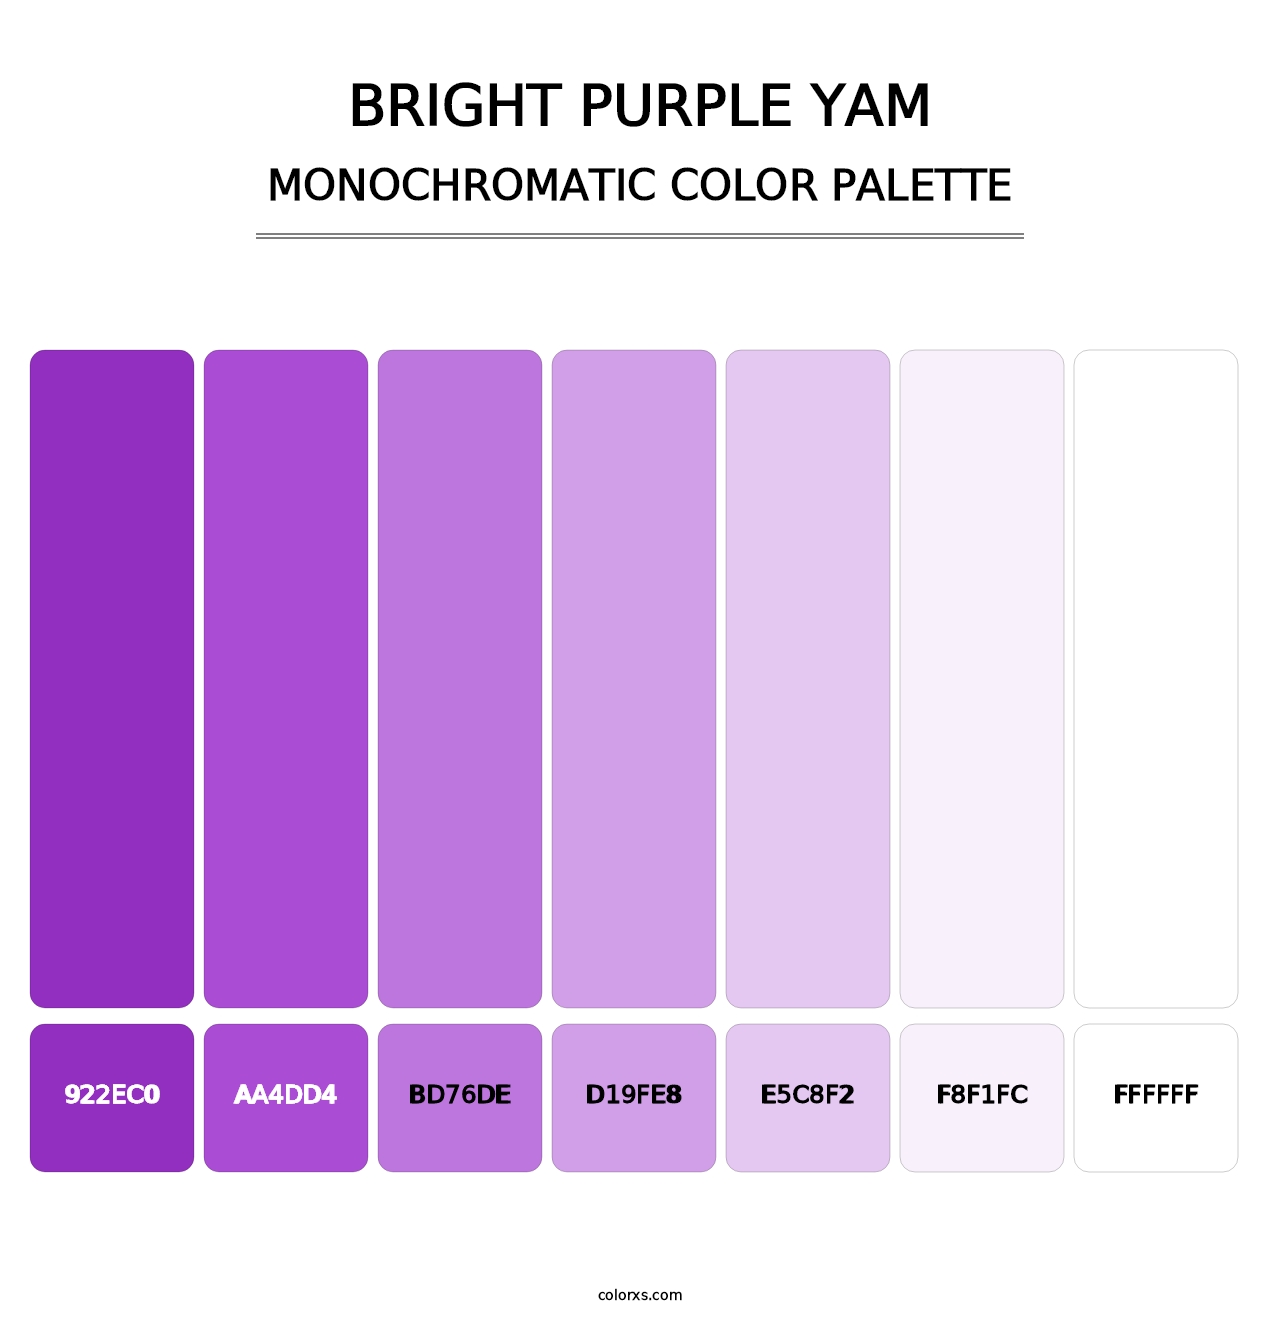 Bright Purple Yam - Monochromatic Color Palette